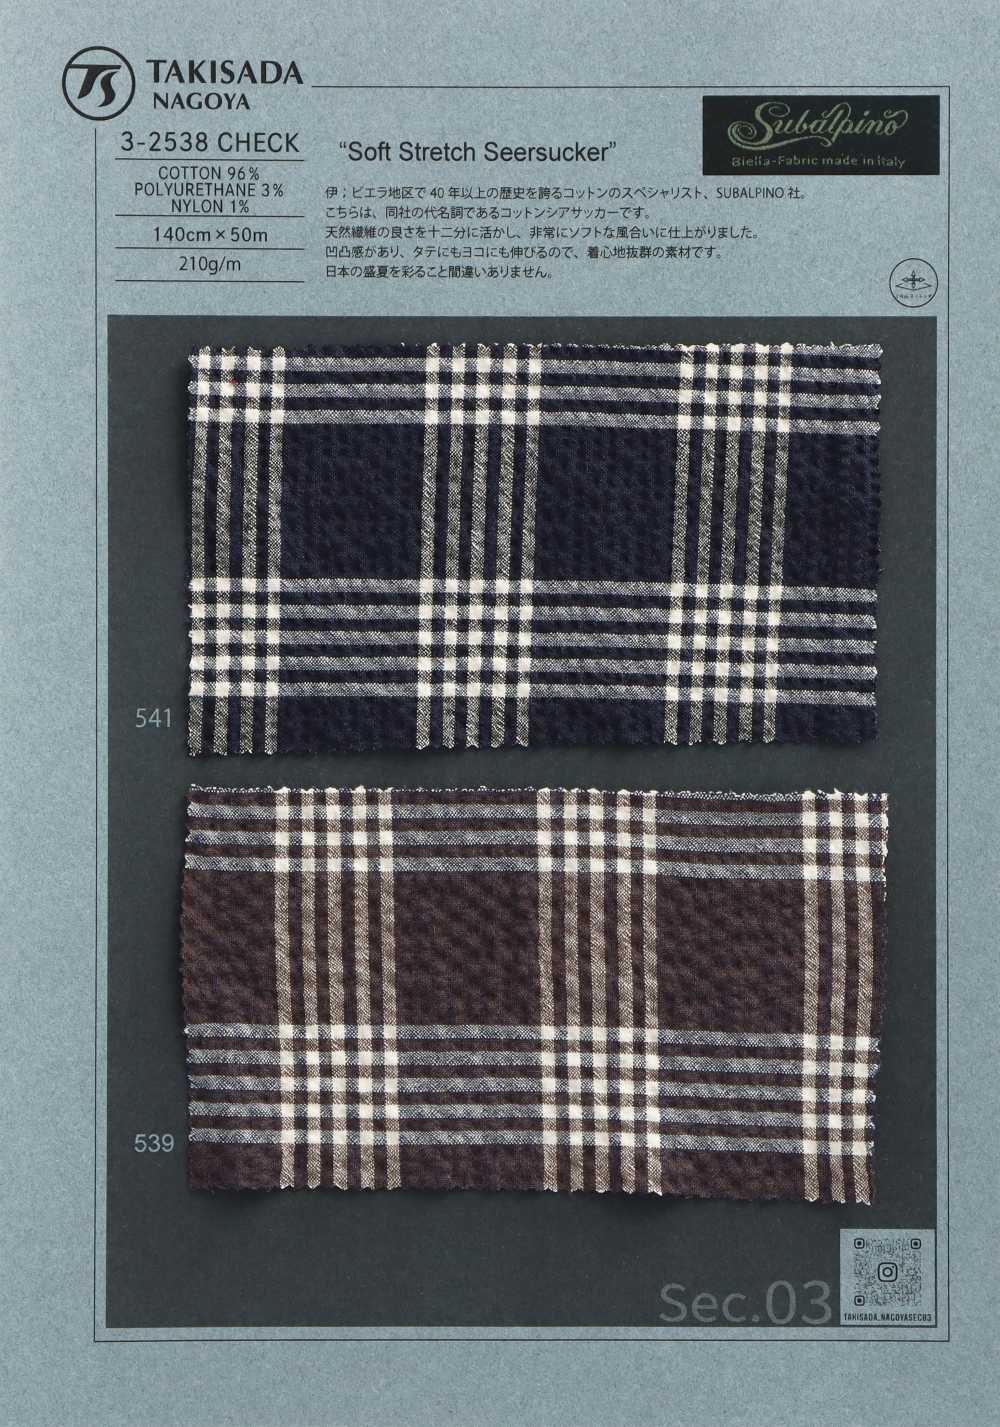 3-2538CHECK SUBALPINO Shear Seersucker Check[Tessile / Tessuto] Takisada Nagoya